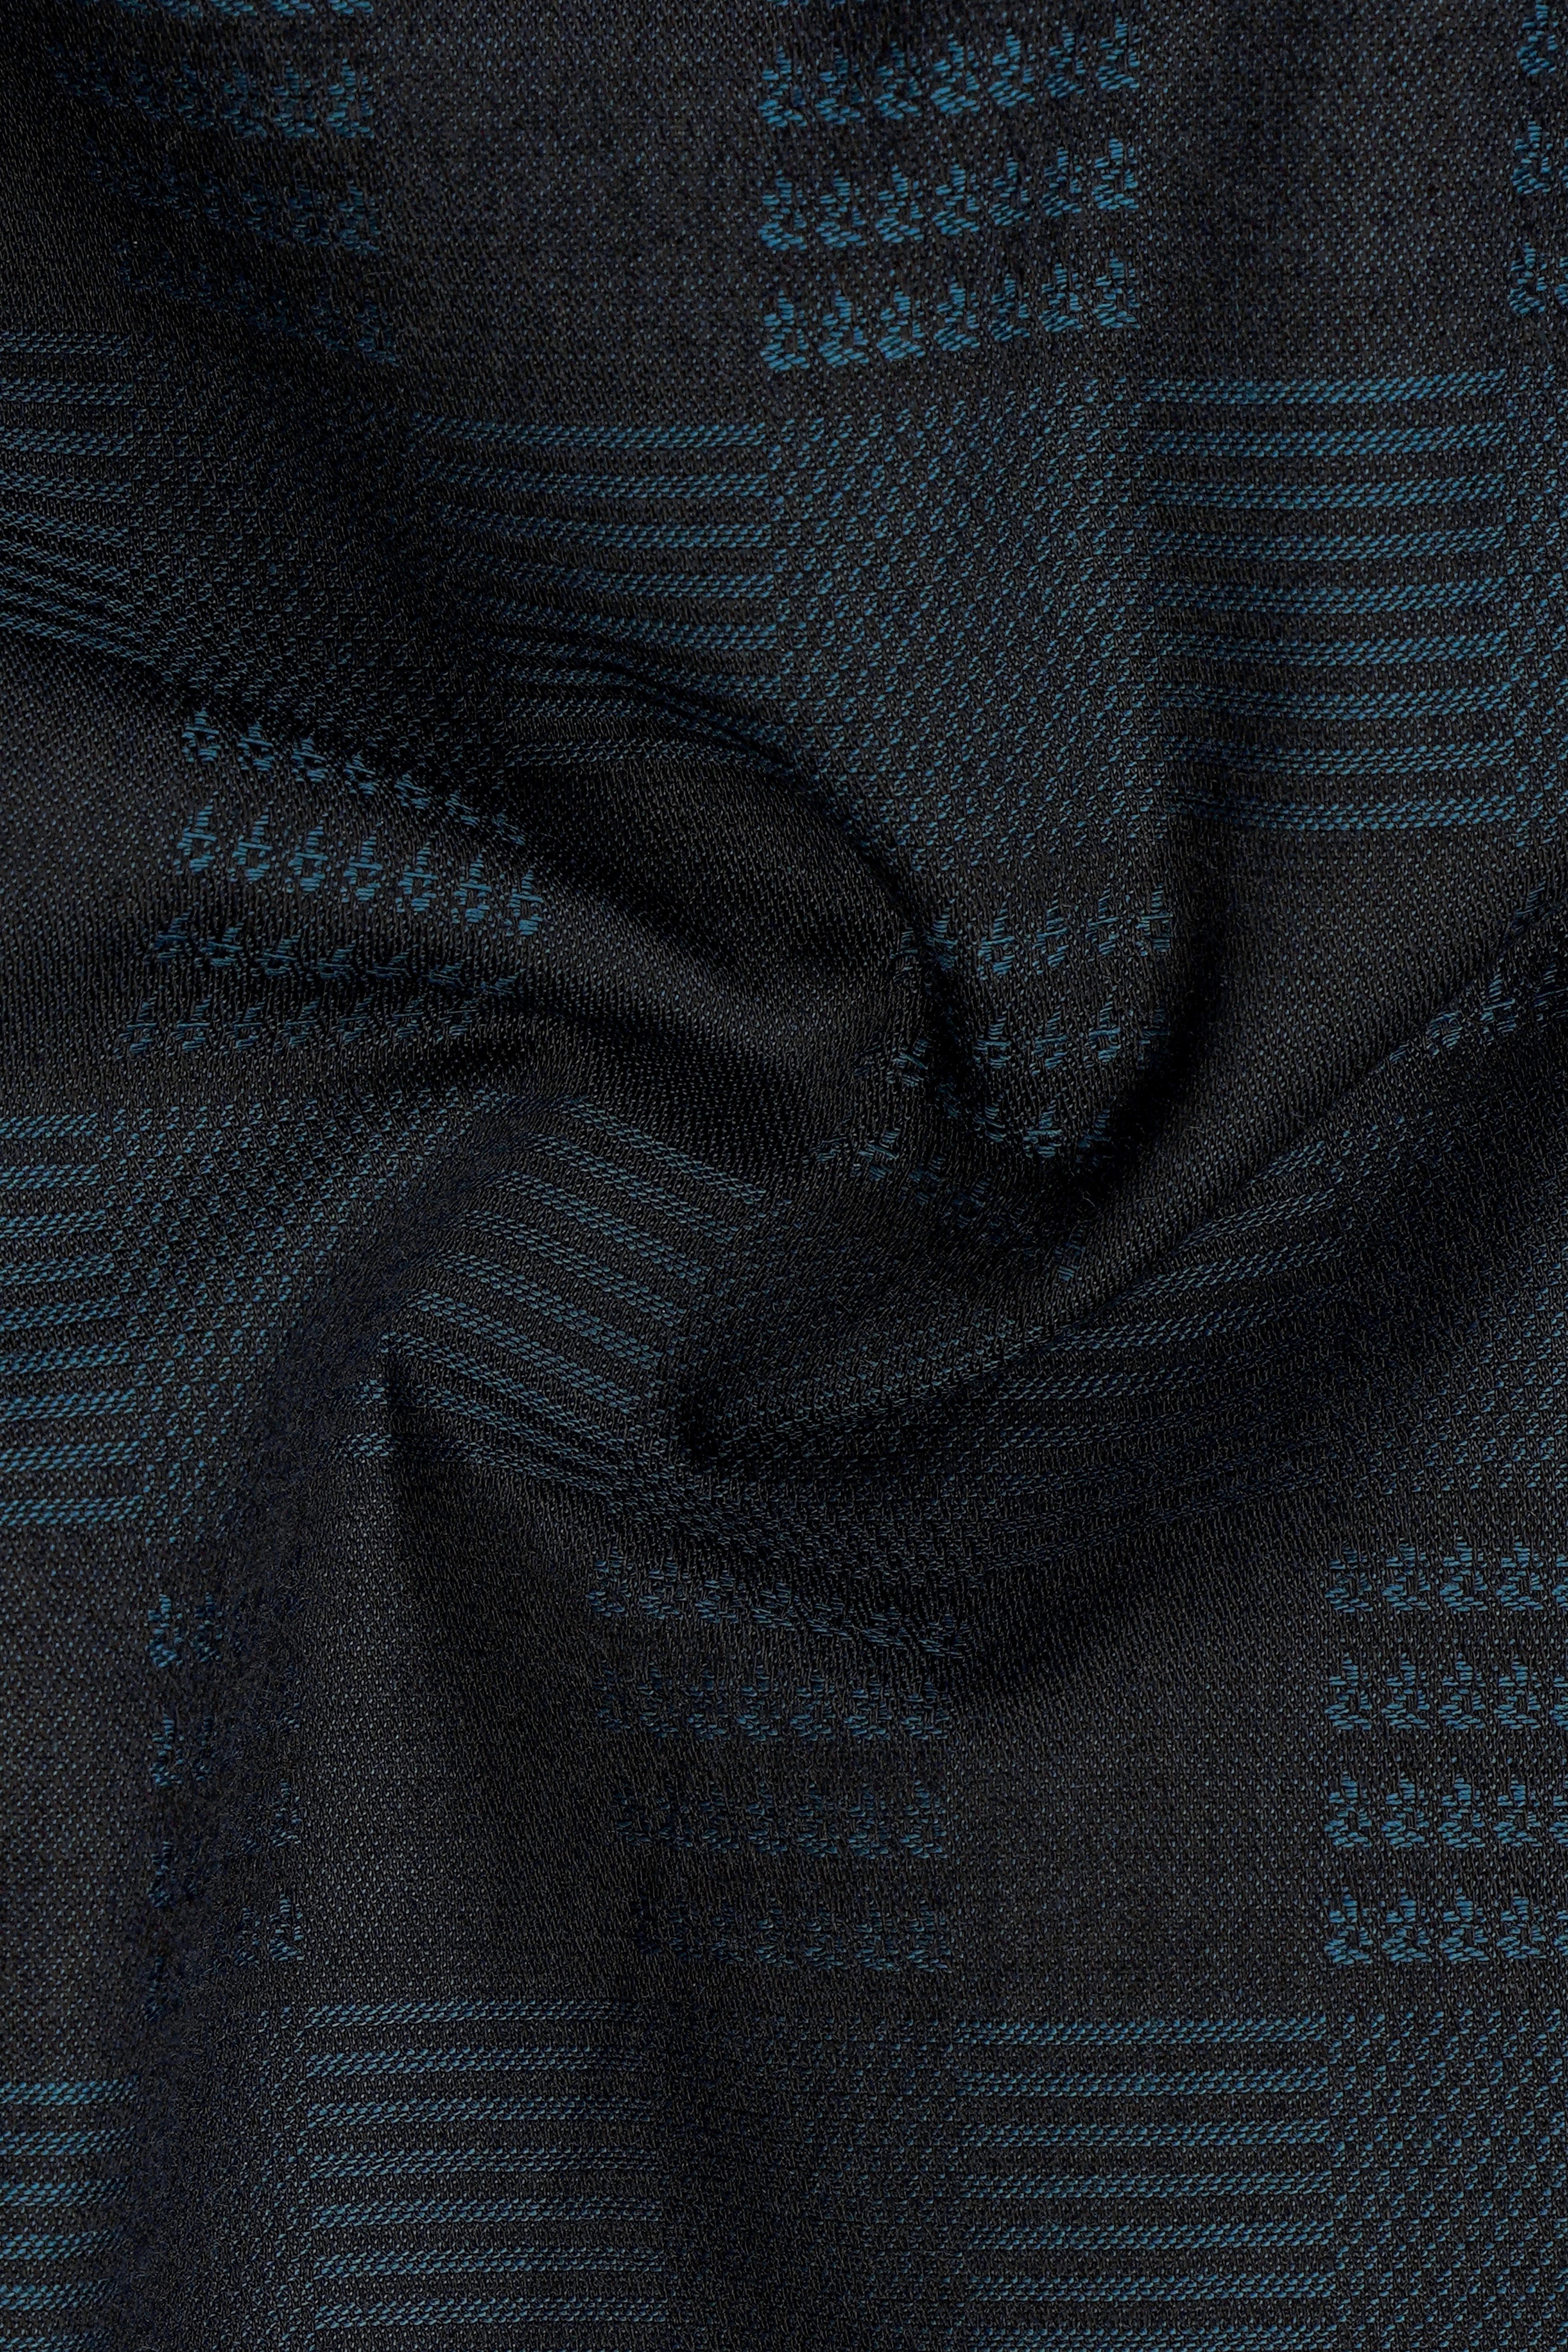 Cinder Blue Jacquard Textured Premium Cotton Shirt